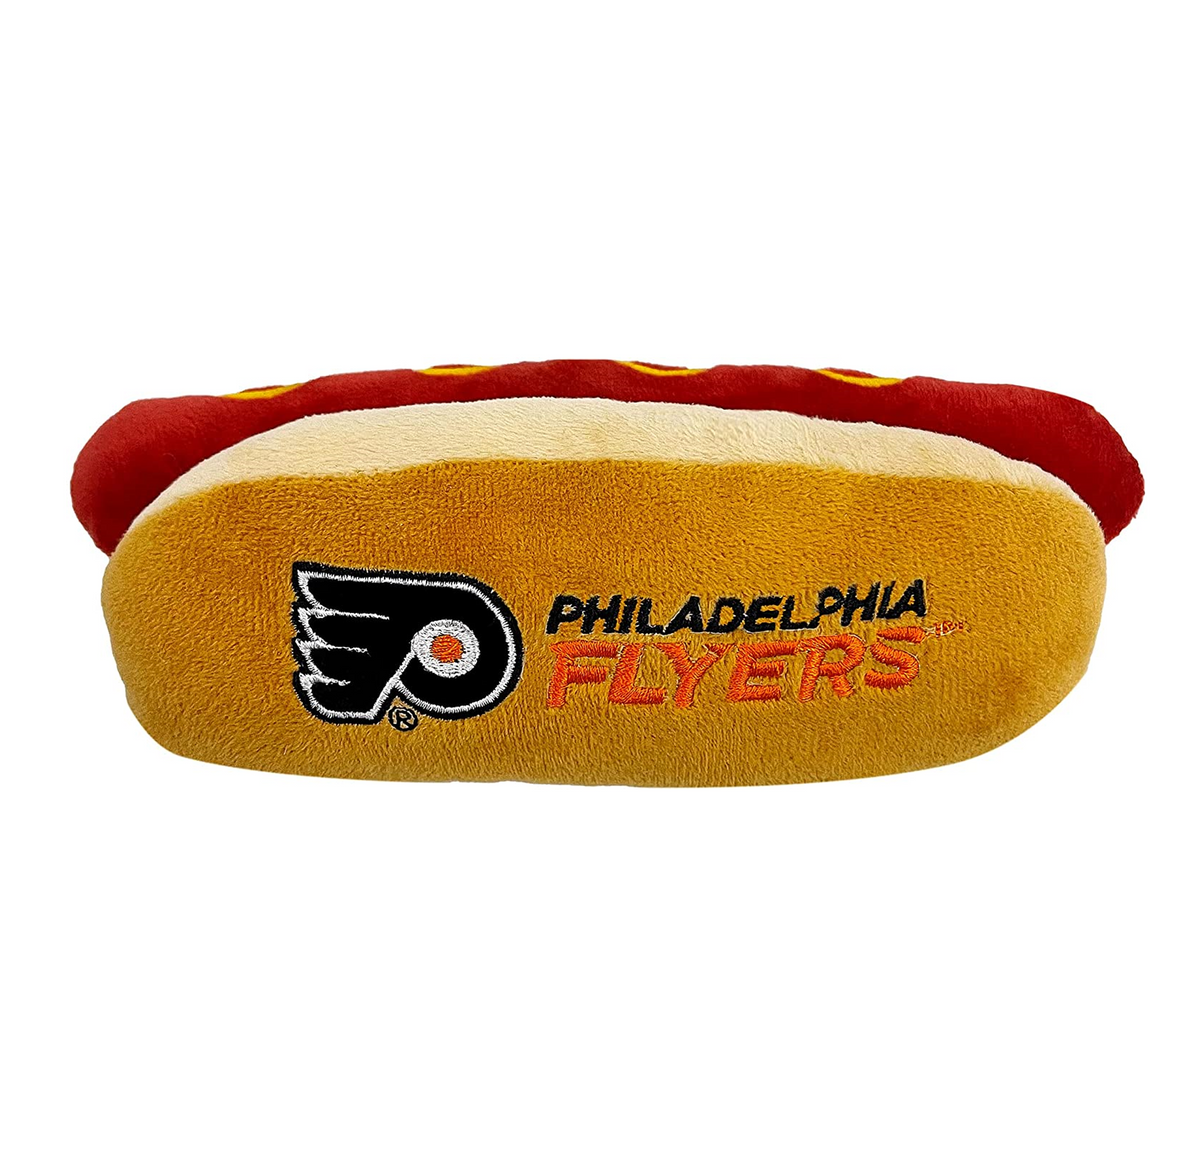 Philadelphia Flyers Hot Dog Plush Toys - 3 Red Rovers